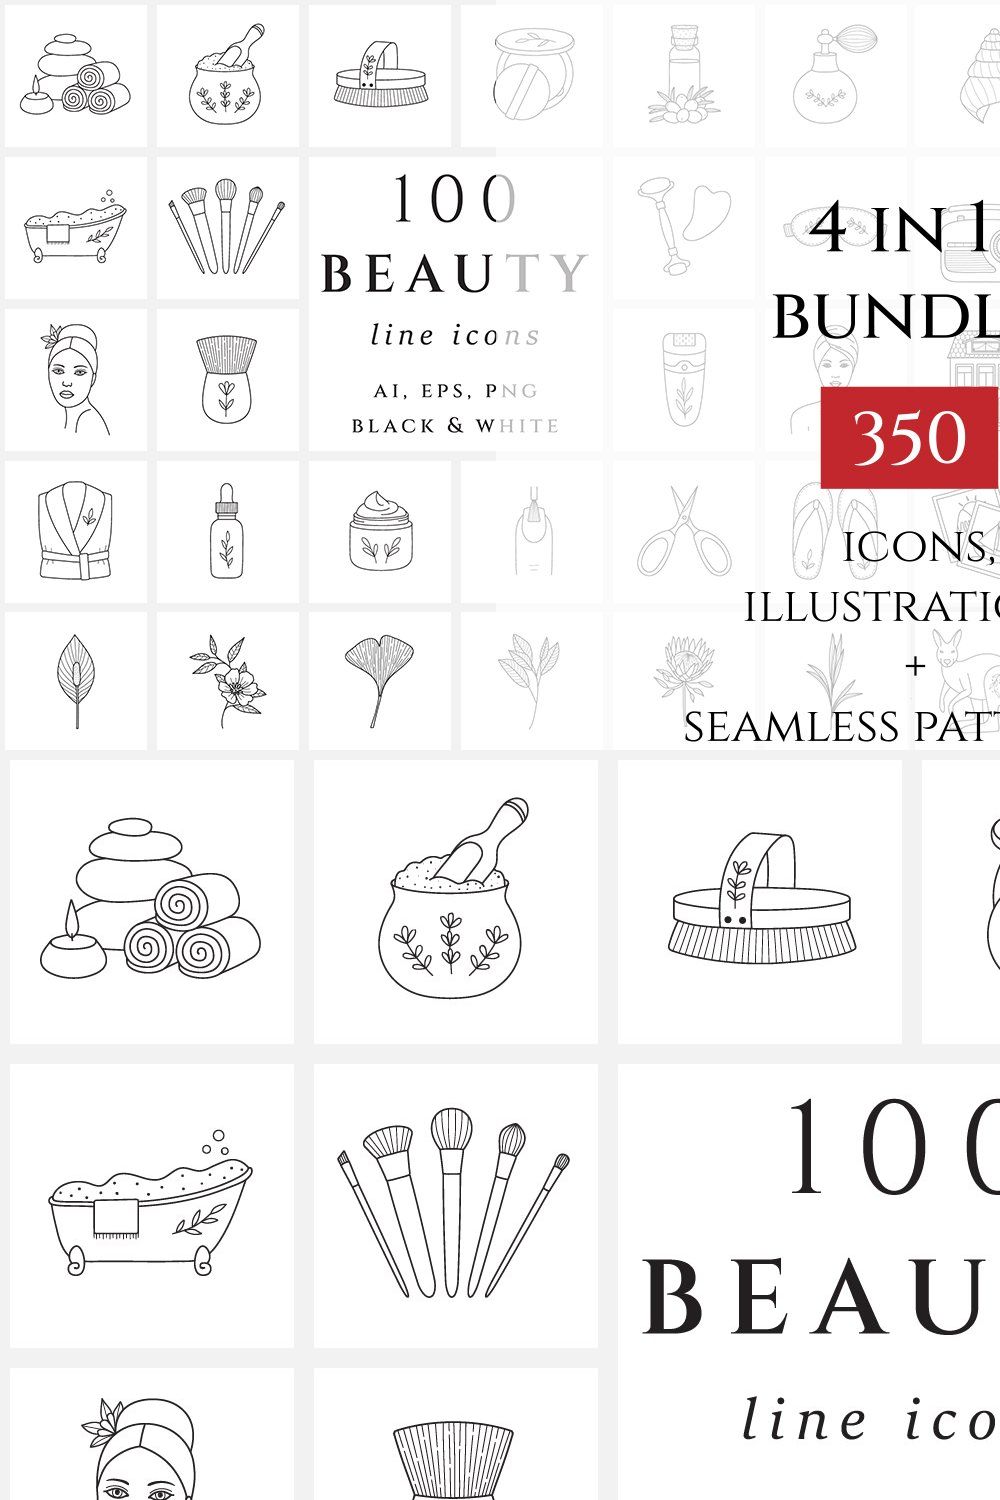 Icons & Illustrations Bundle pinterest preview image.